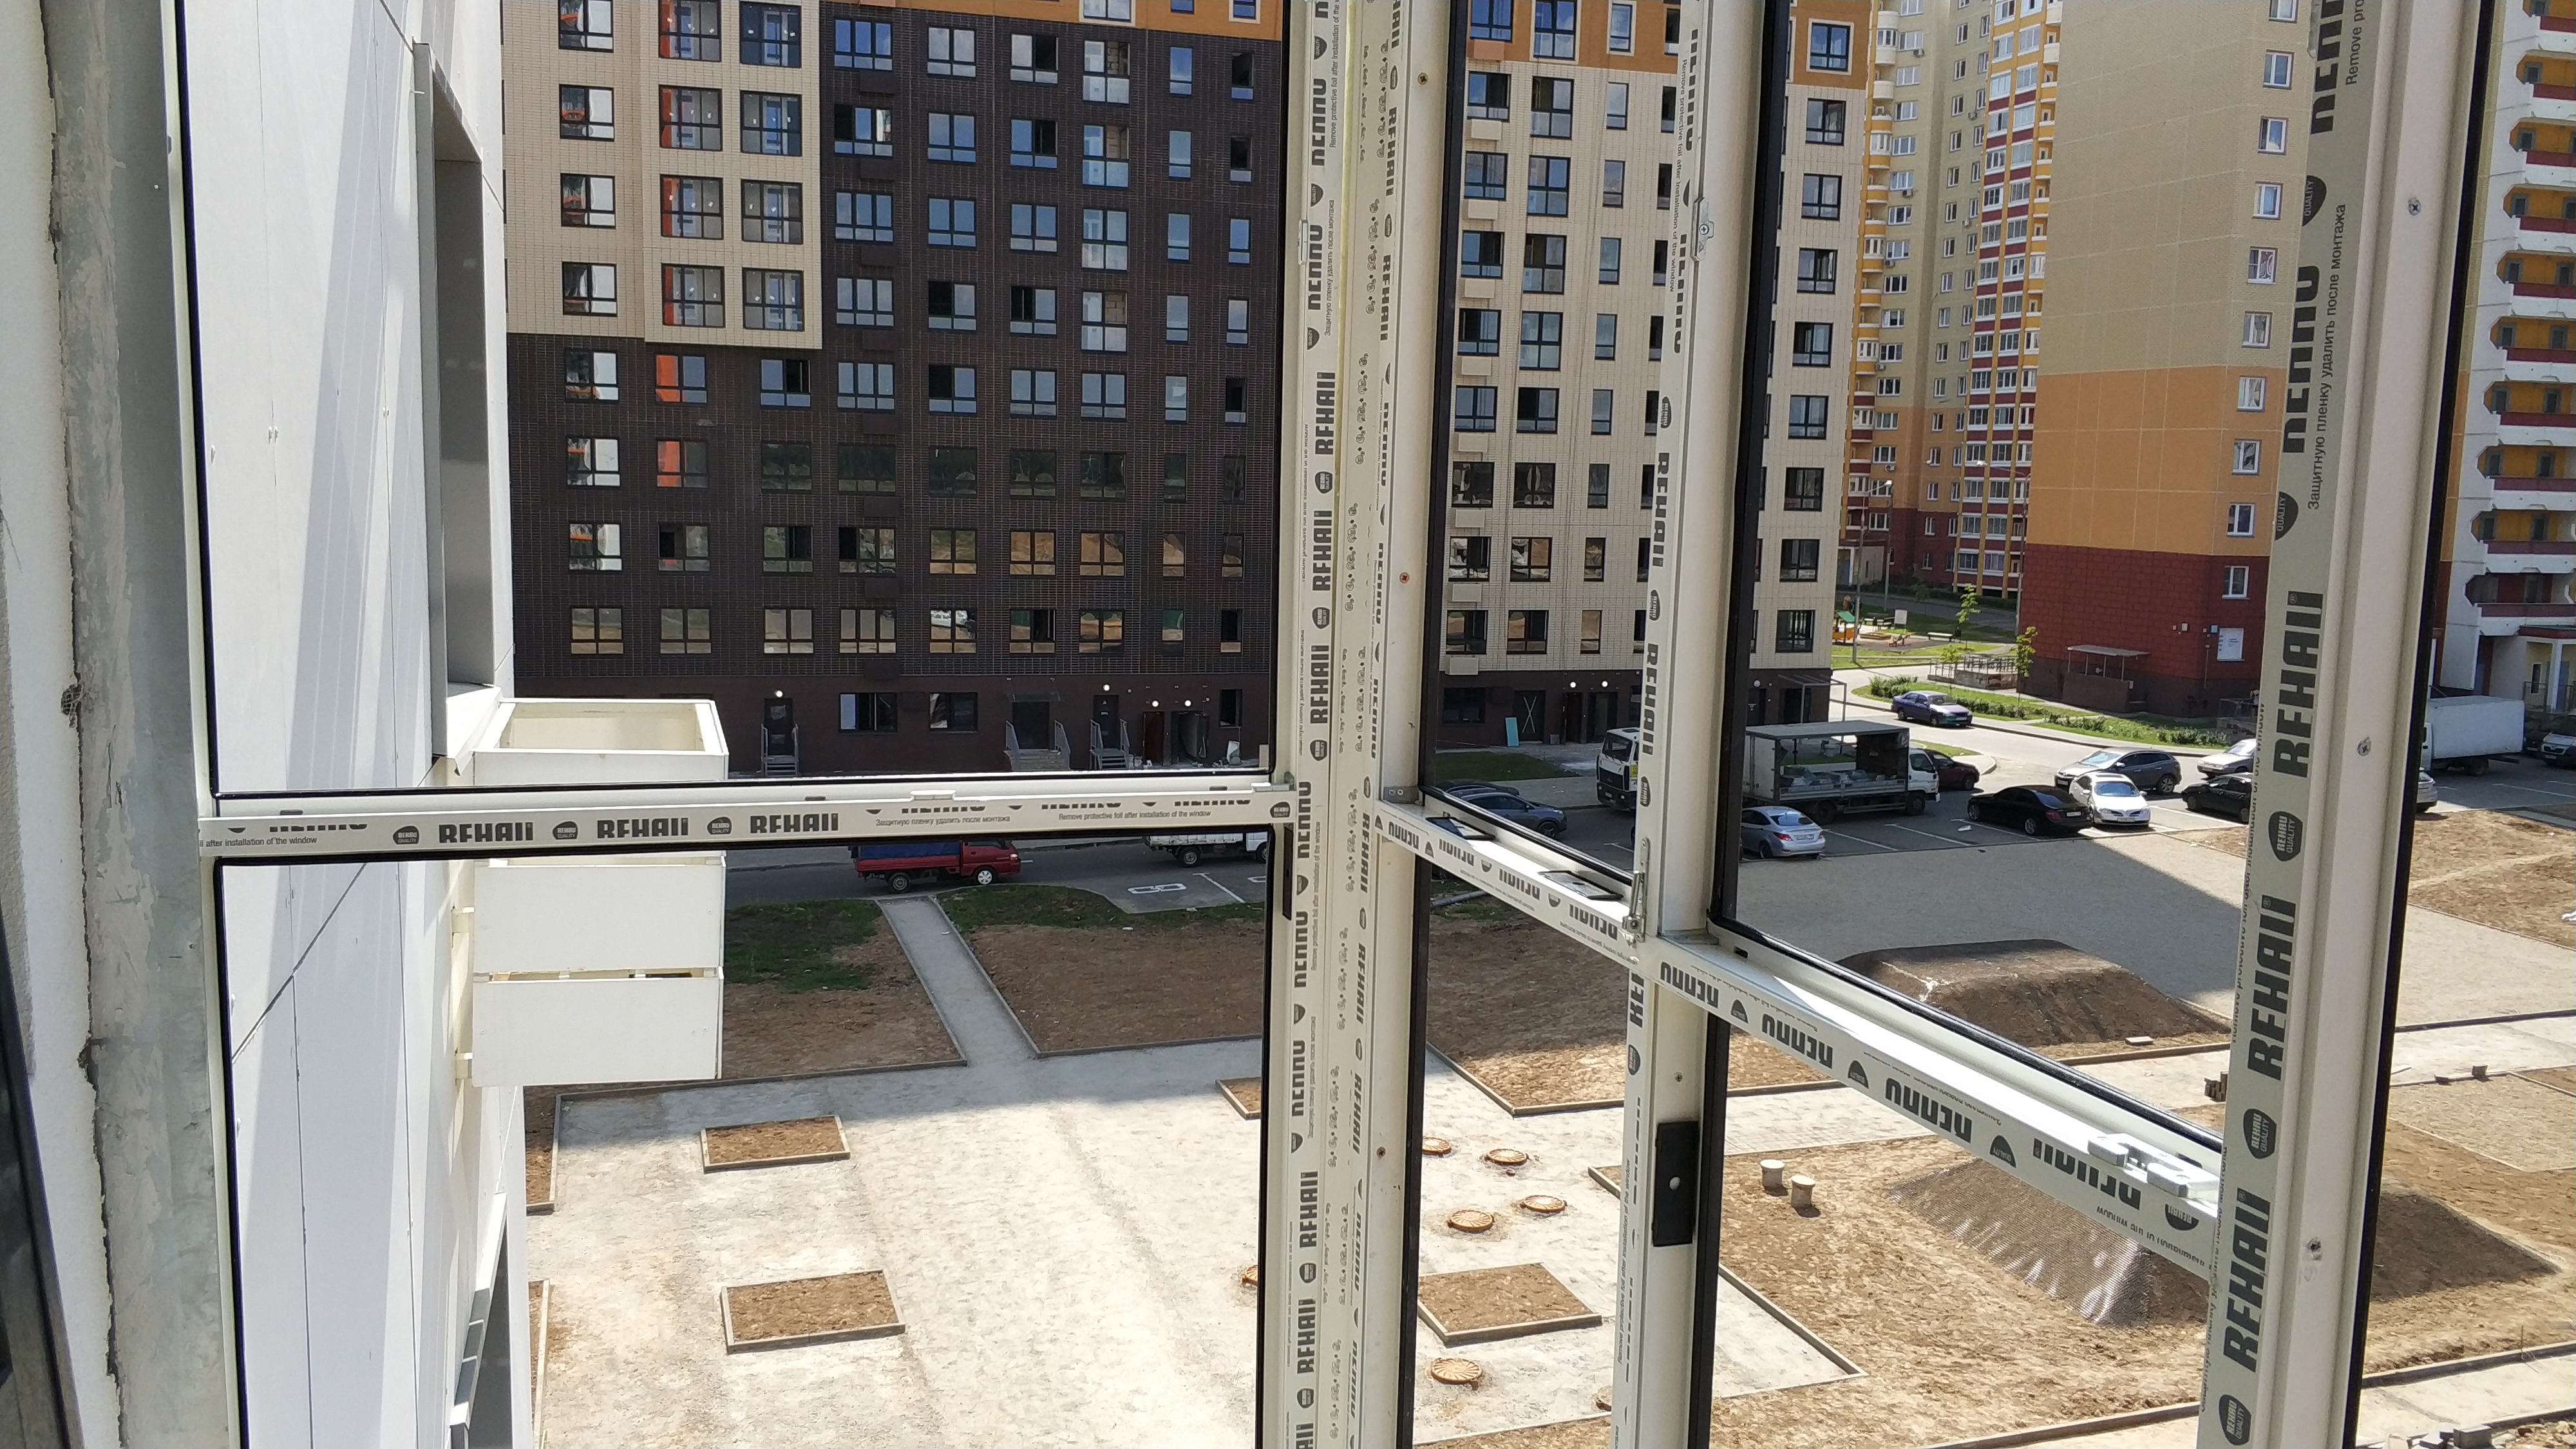 Окно pushkino msk oknaidveri ru. Москитная сетка на Слайдорс. Бутово парк Южная 23 окна на балконе. О6ои окон 10.